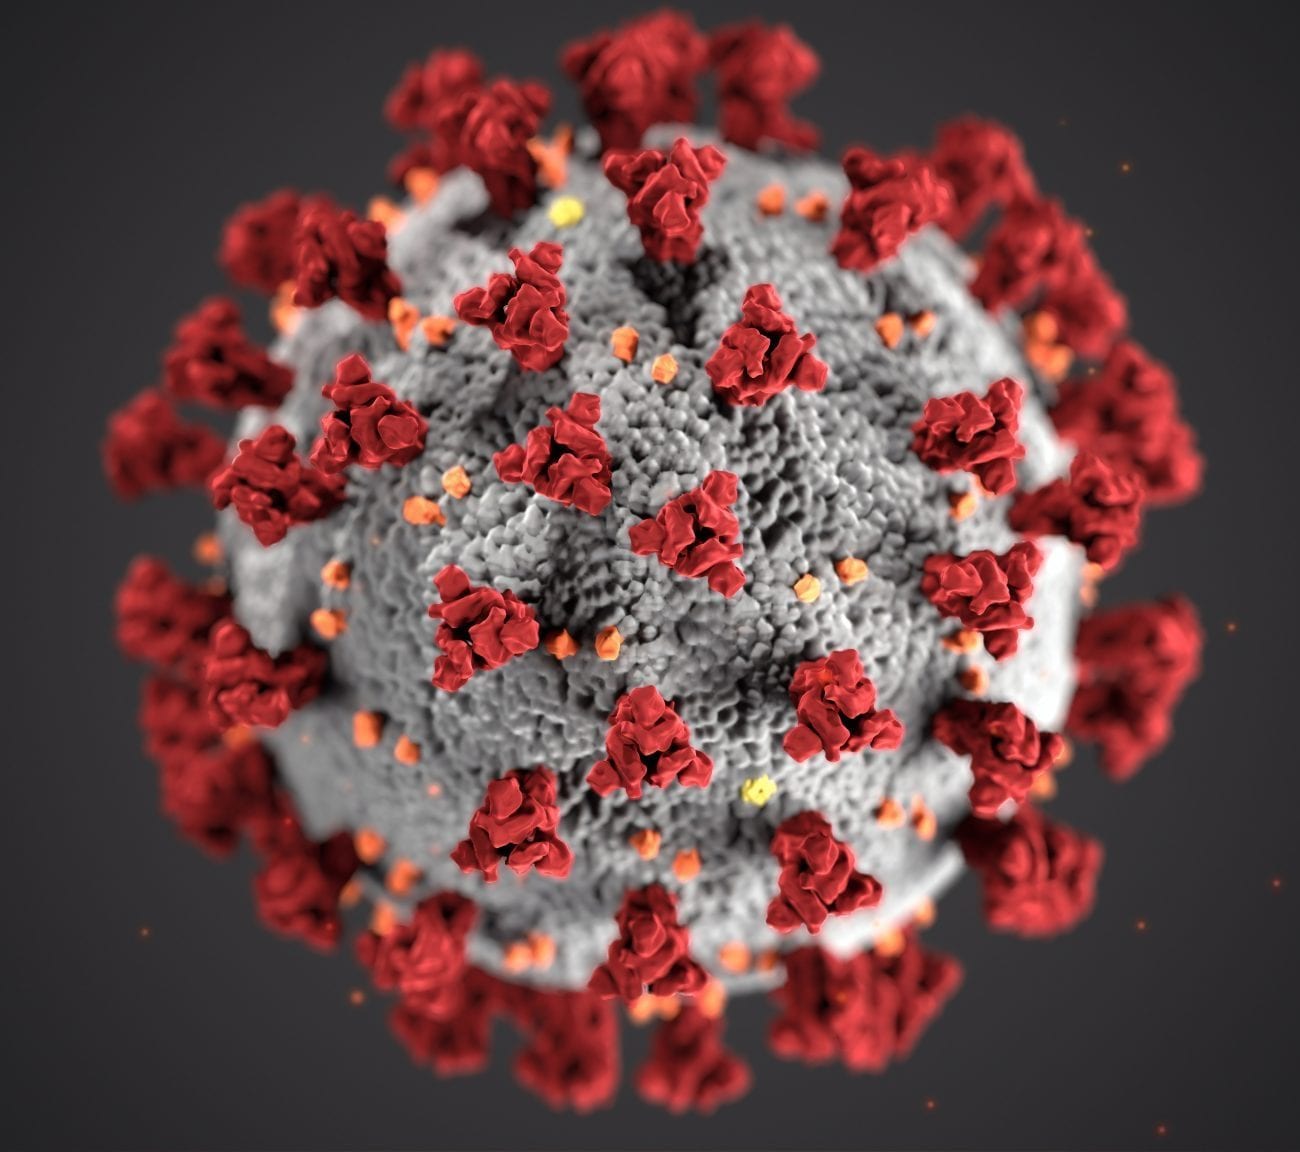 Coronavirus CDC microscopic image